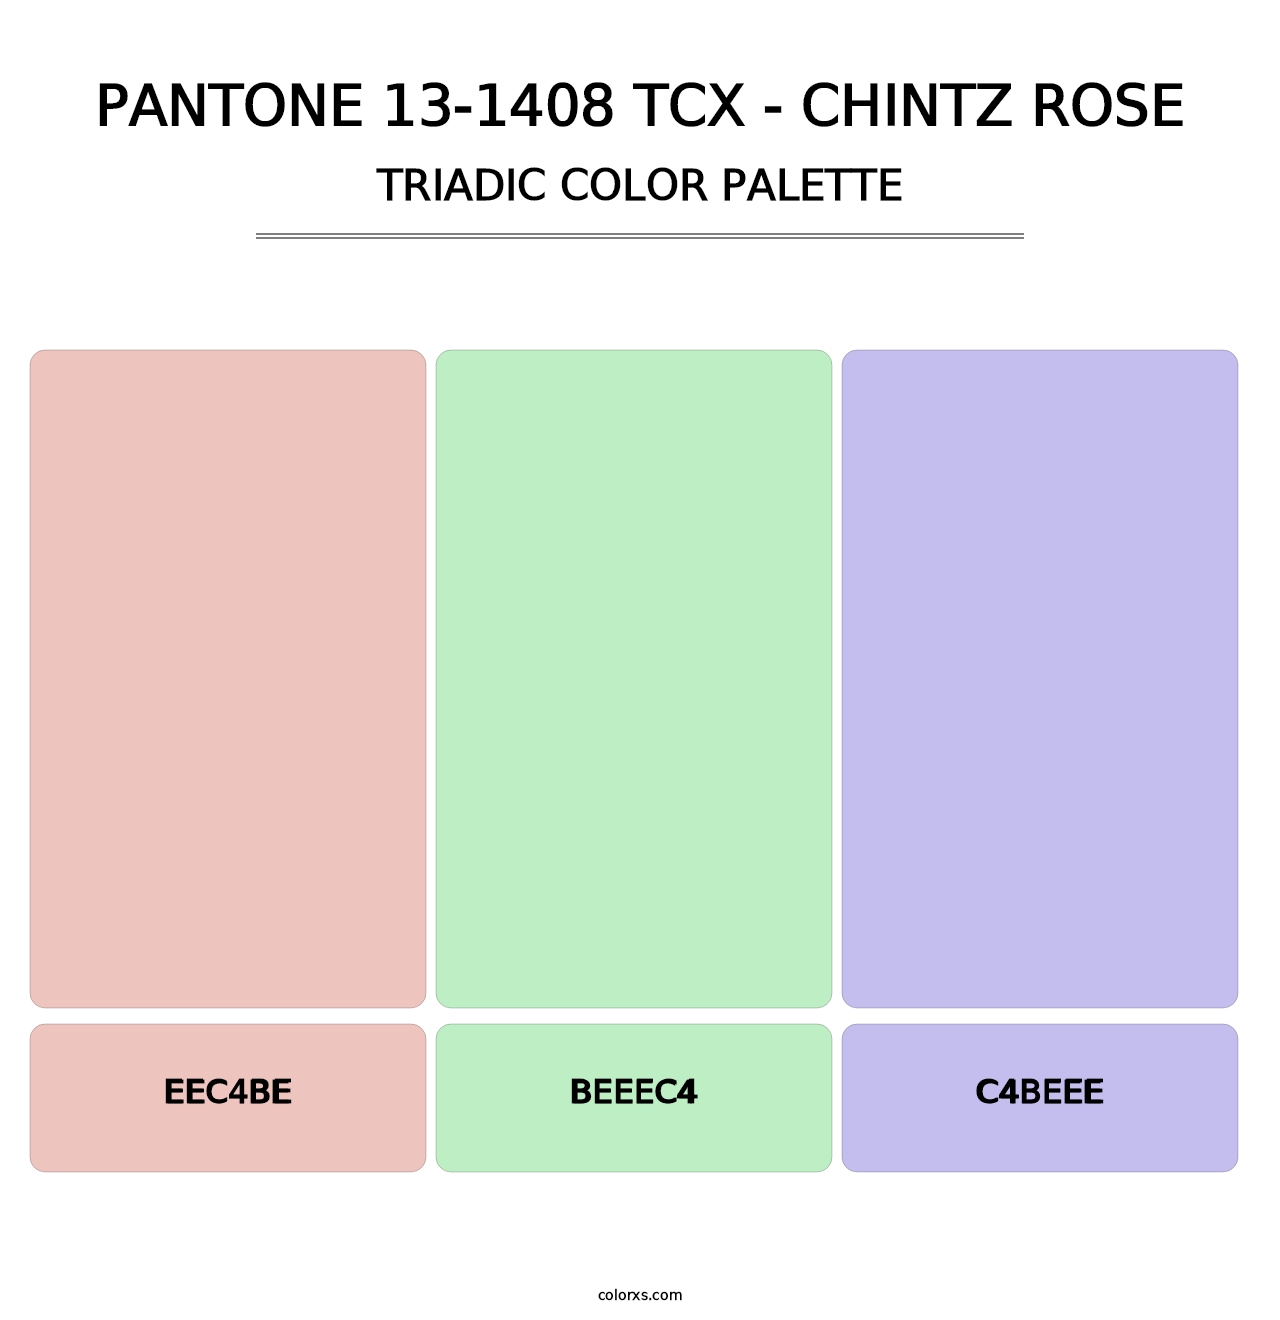 PANTONE 13-1408 TCX - Chintz Rose - Triadic Color Palette